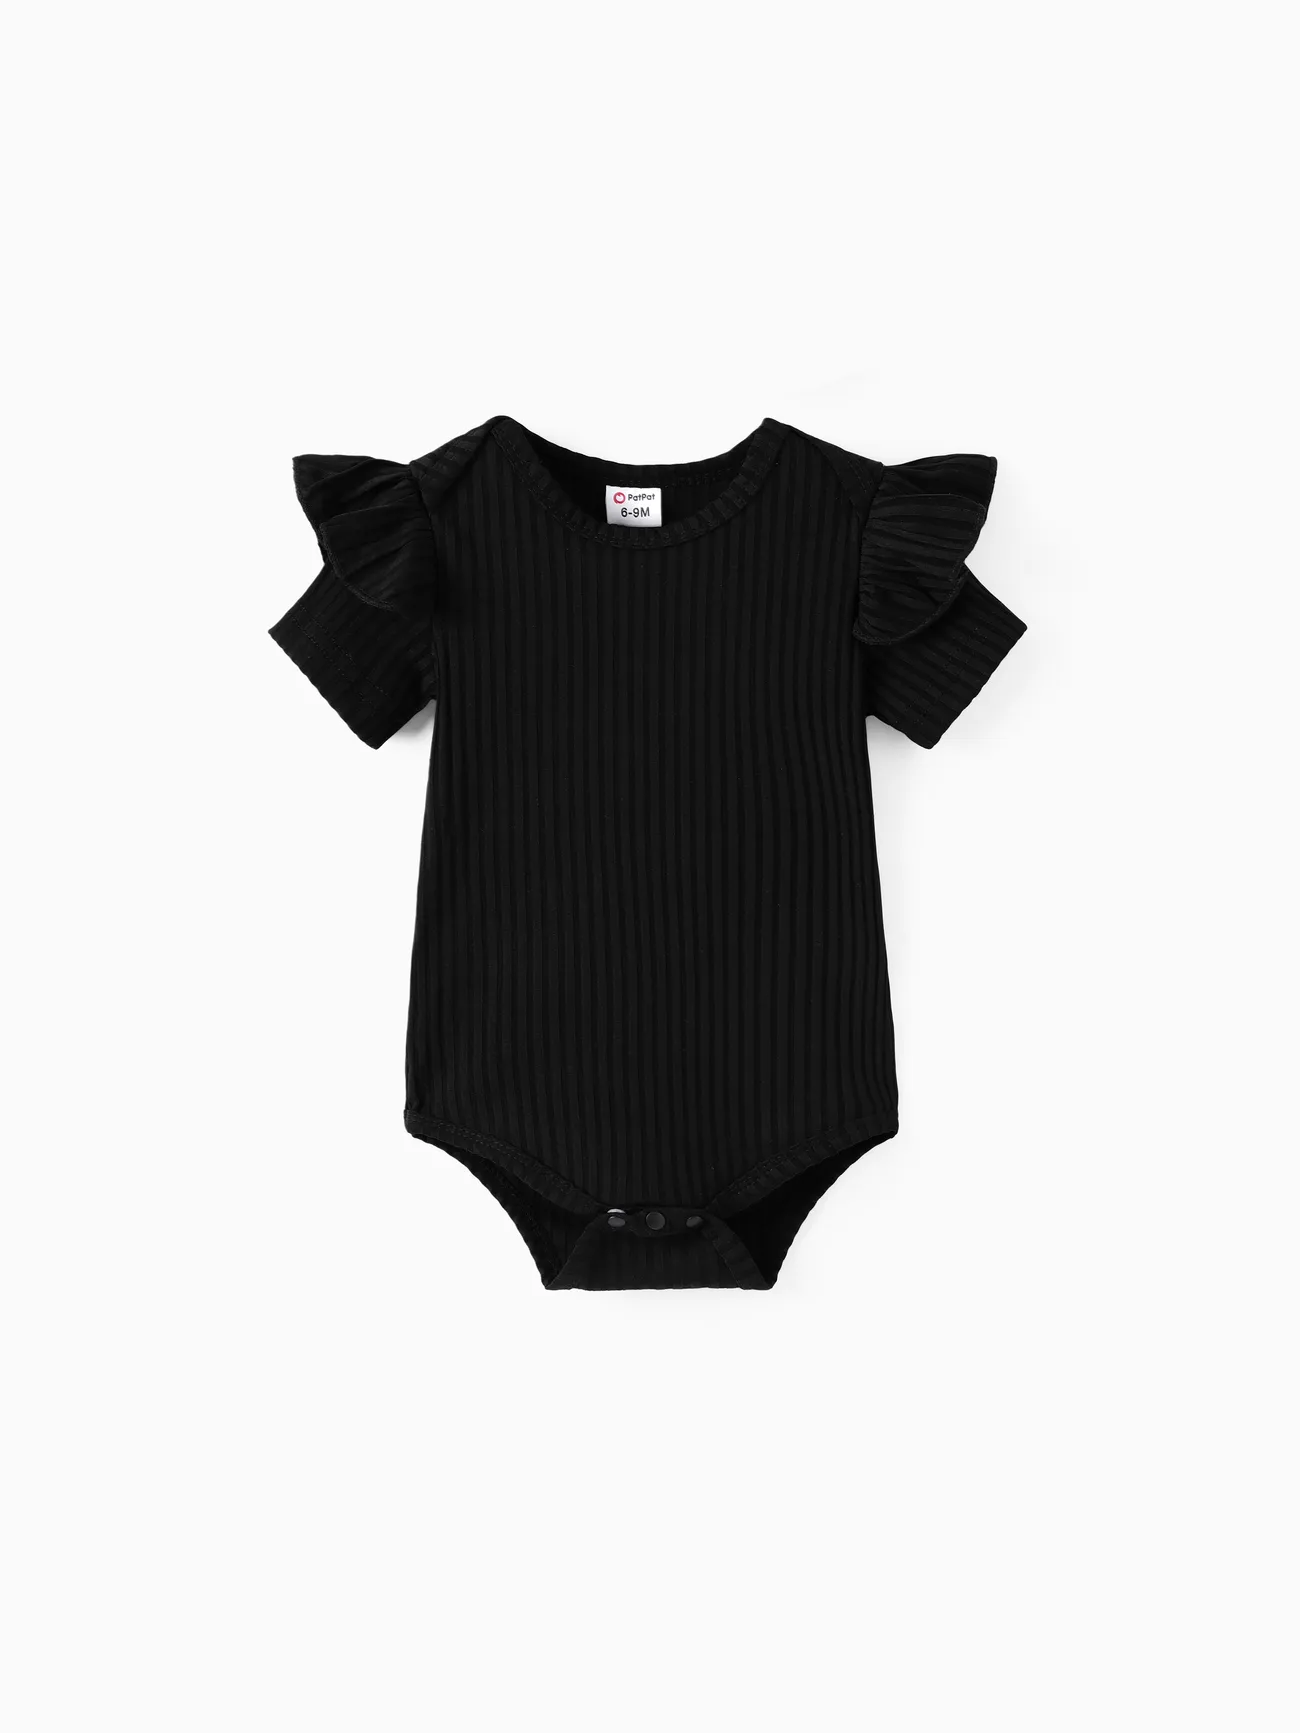 3pcs Baby Girl Black Ribbed Short-sleeve Romper and Tweed Skirt with Headband Set Black big image 1